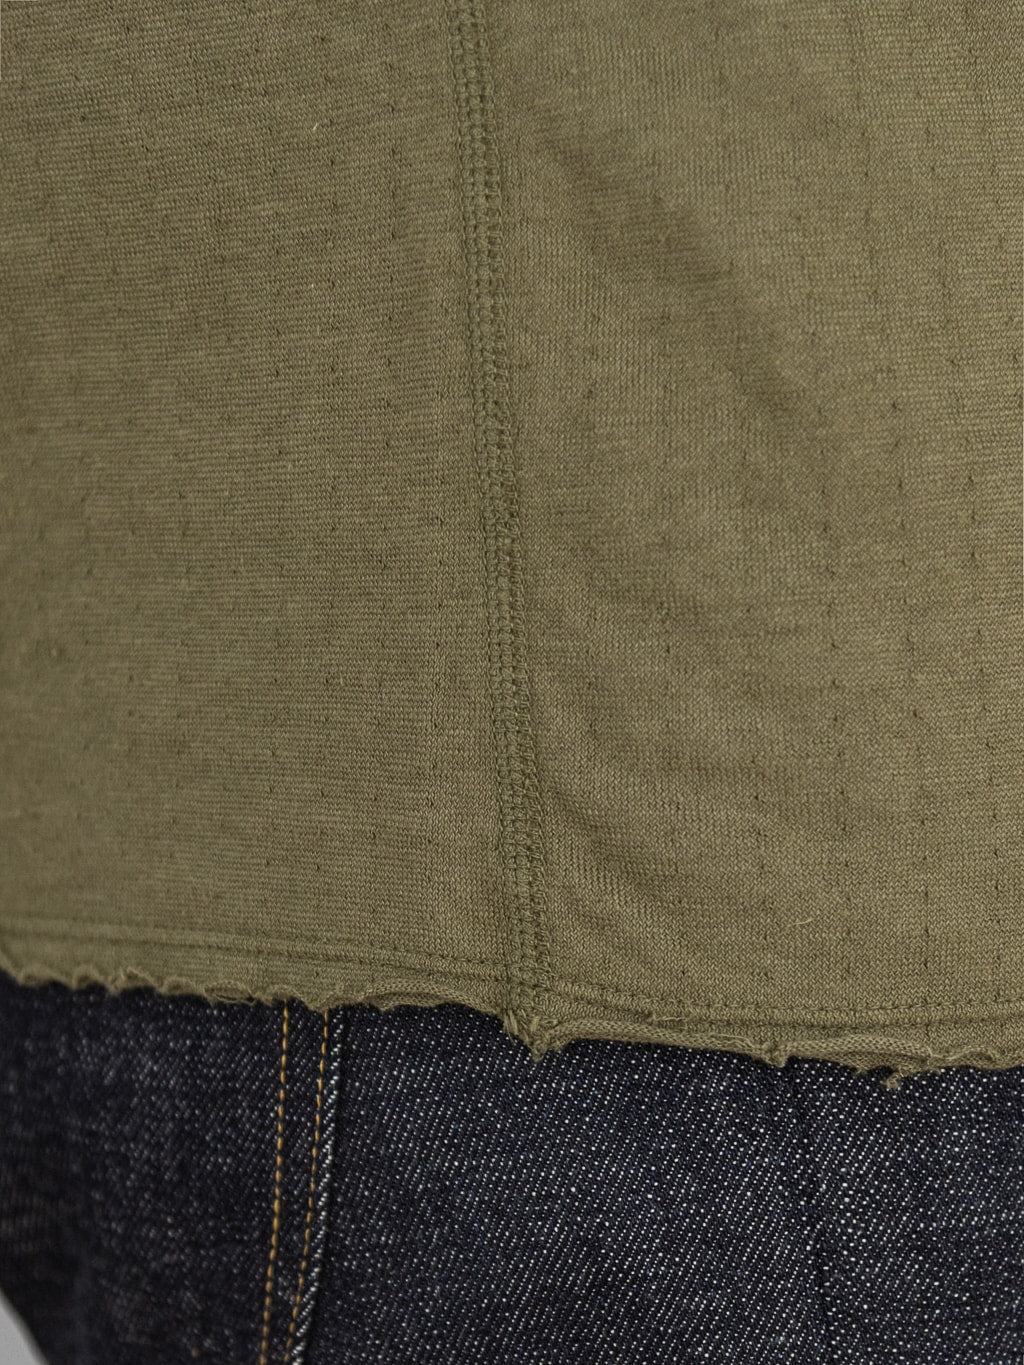 Loop and Weft Dual Layered Knit raw edge pocket TShirt olive hem